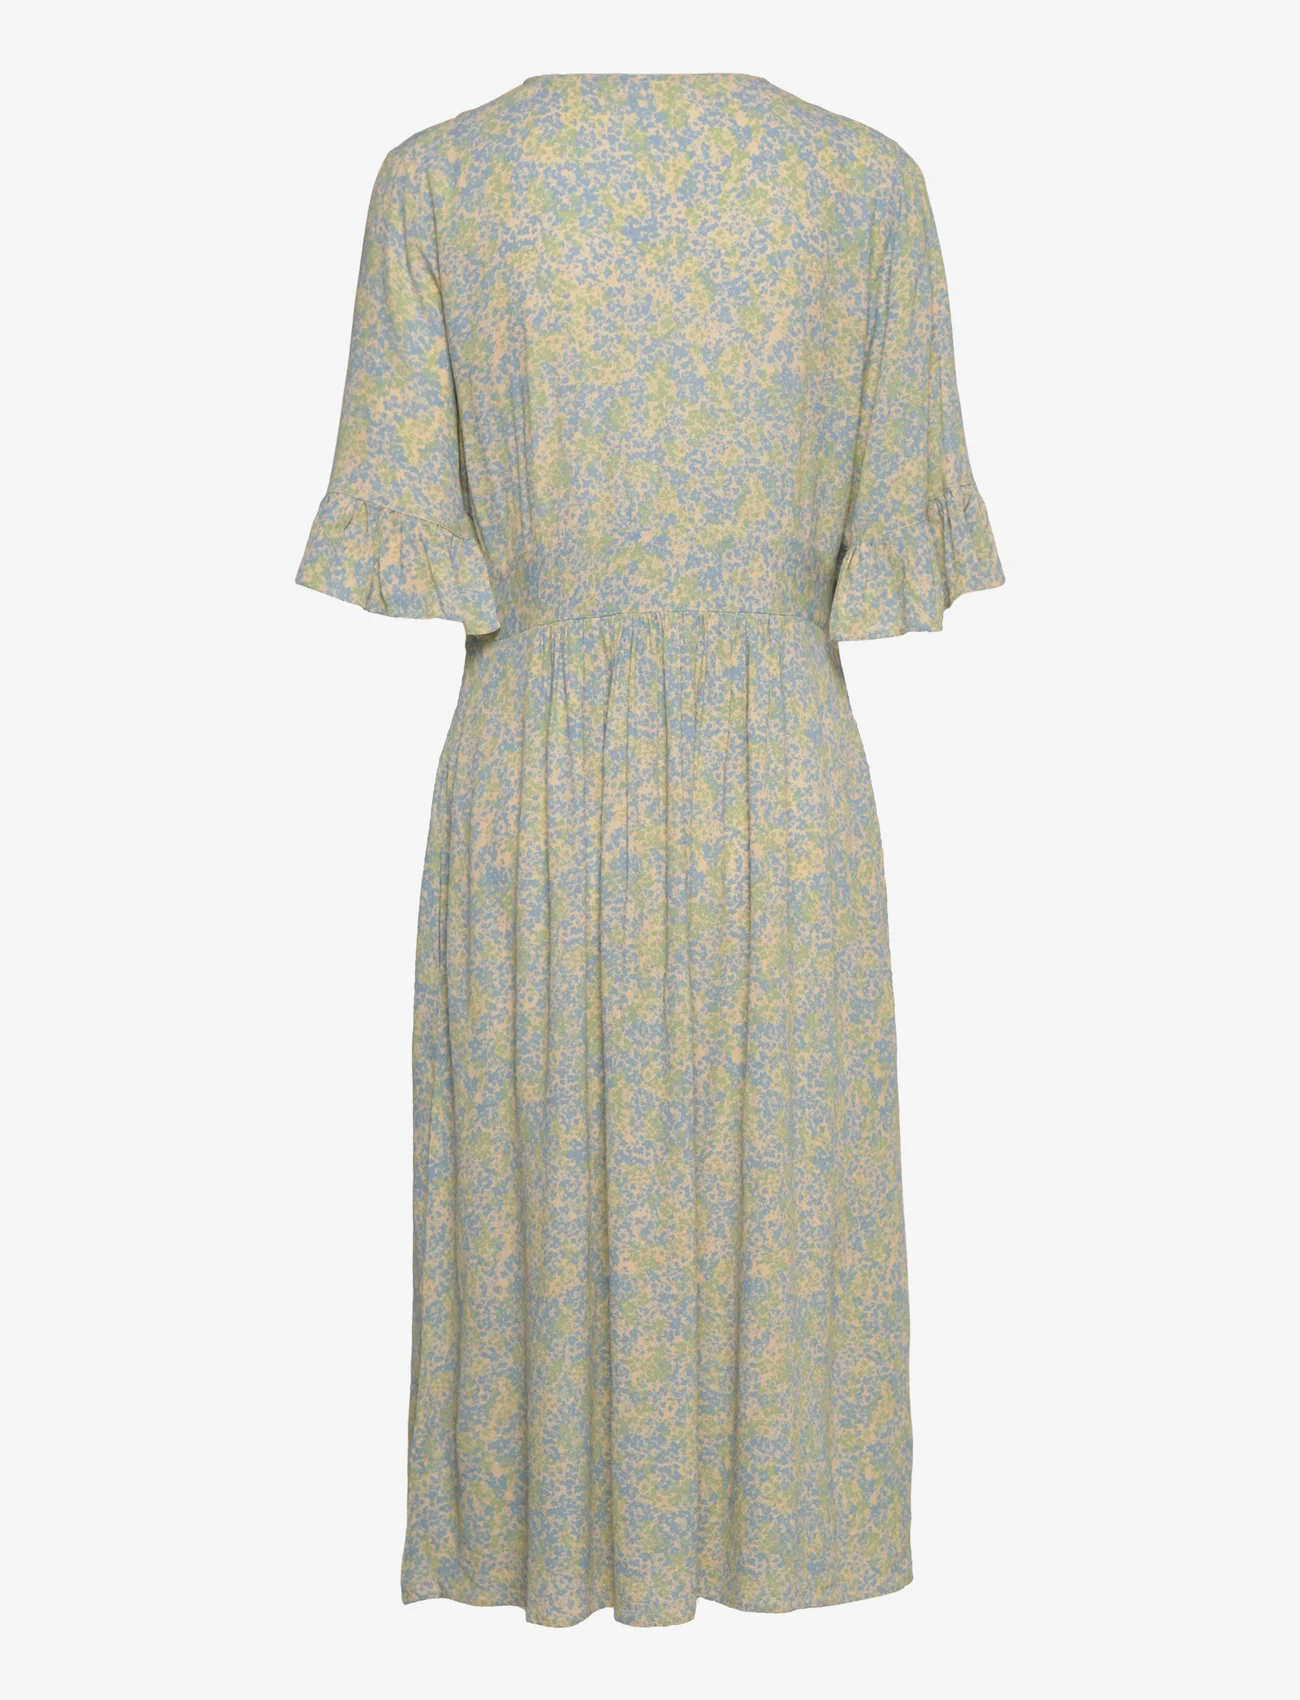 nué notes - Hudson Dress - midi kjoler - light blue - 1